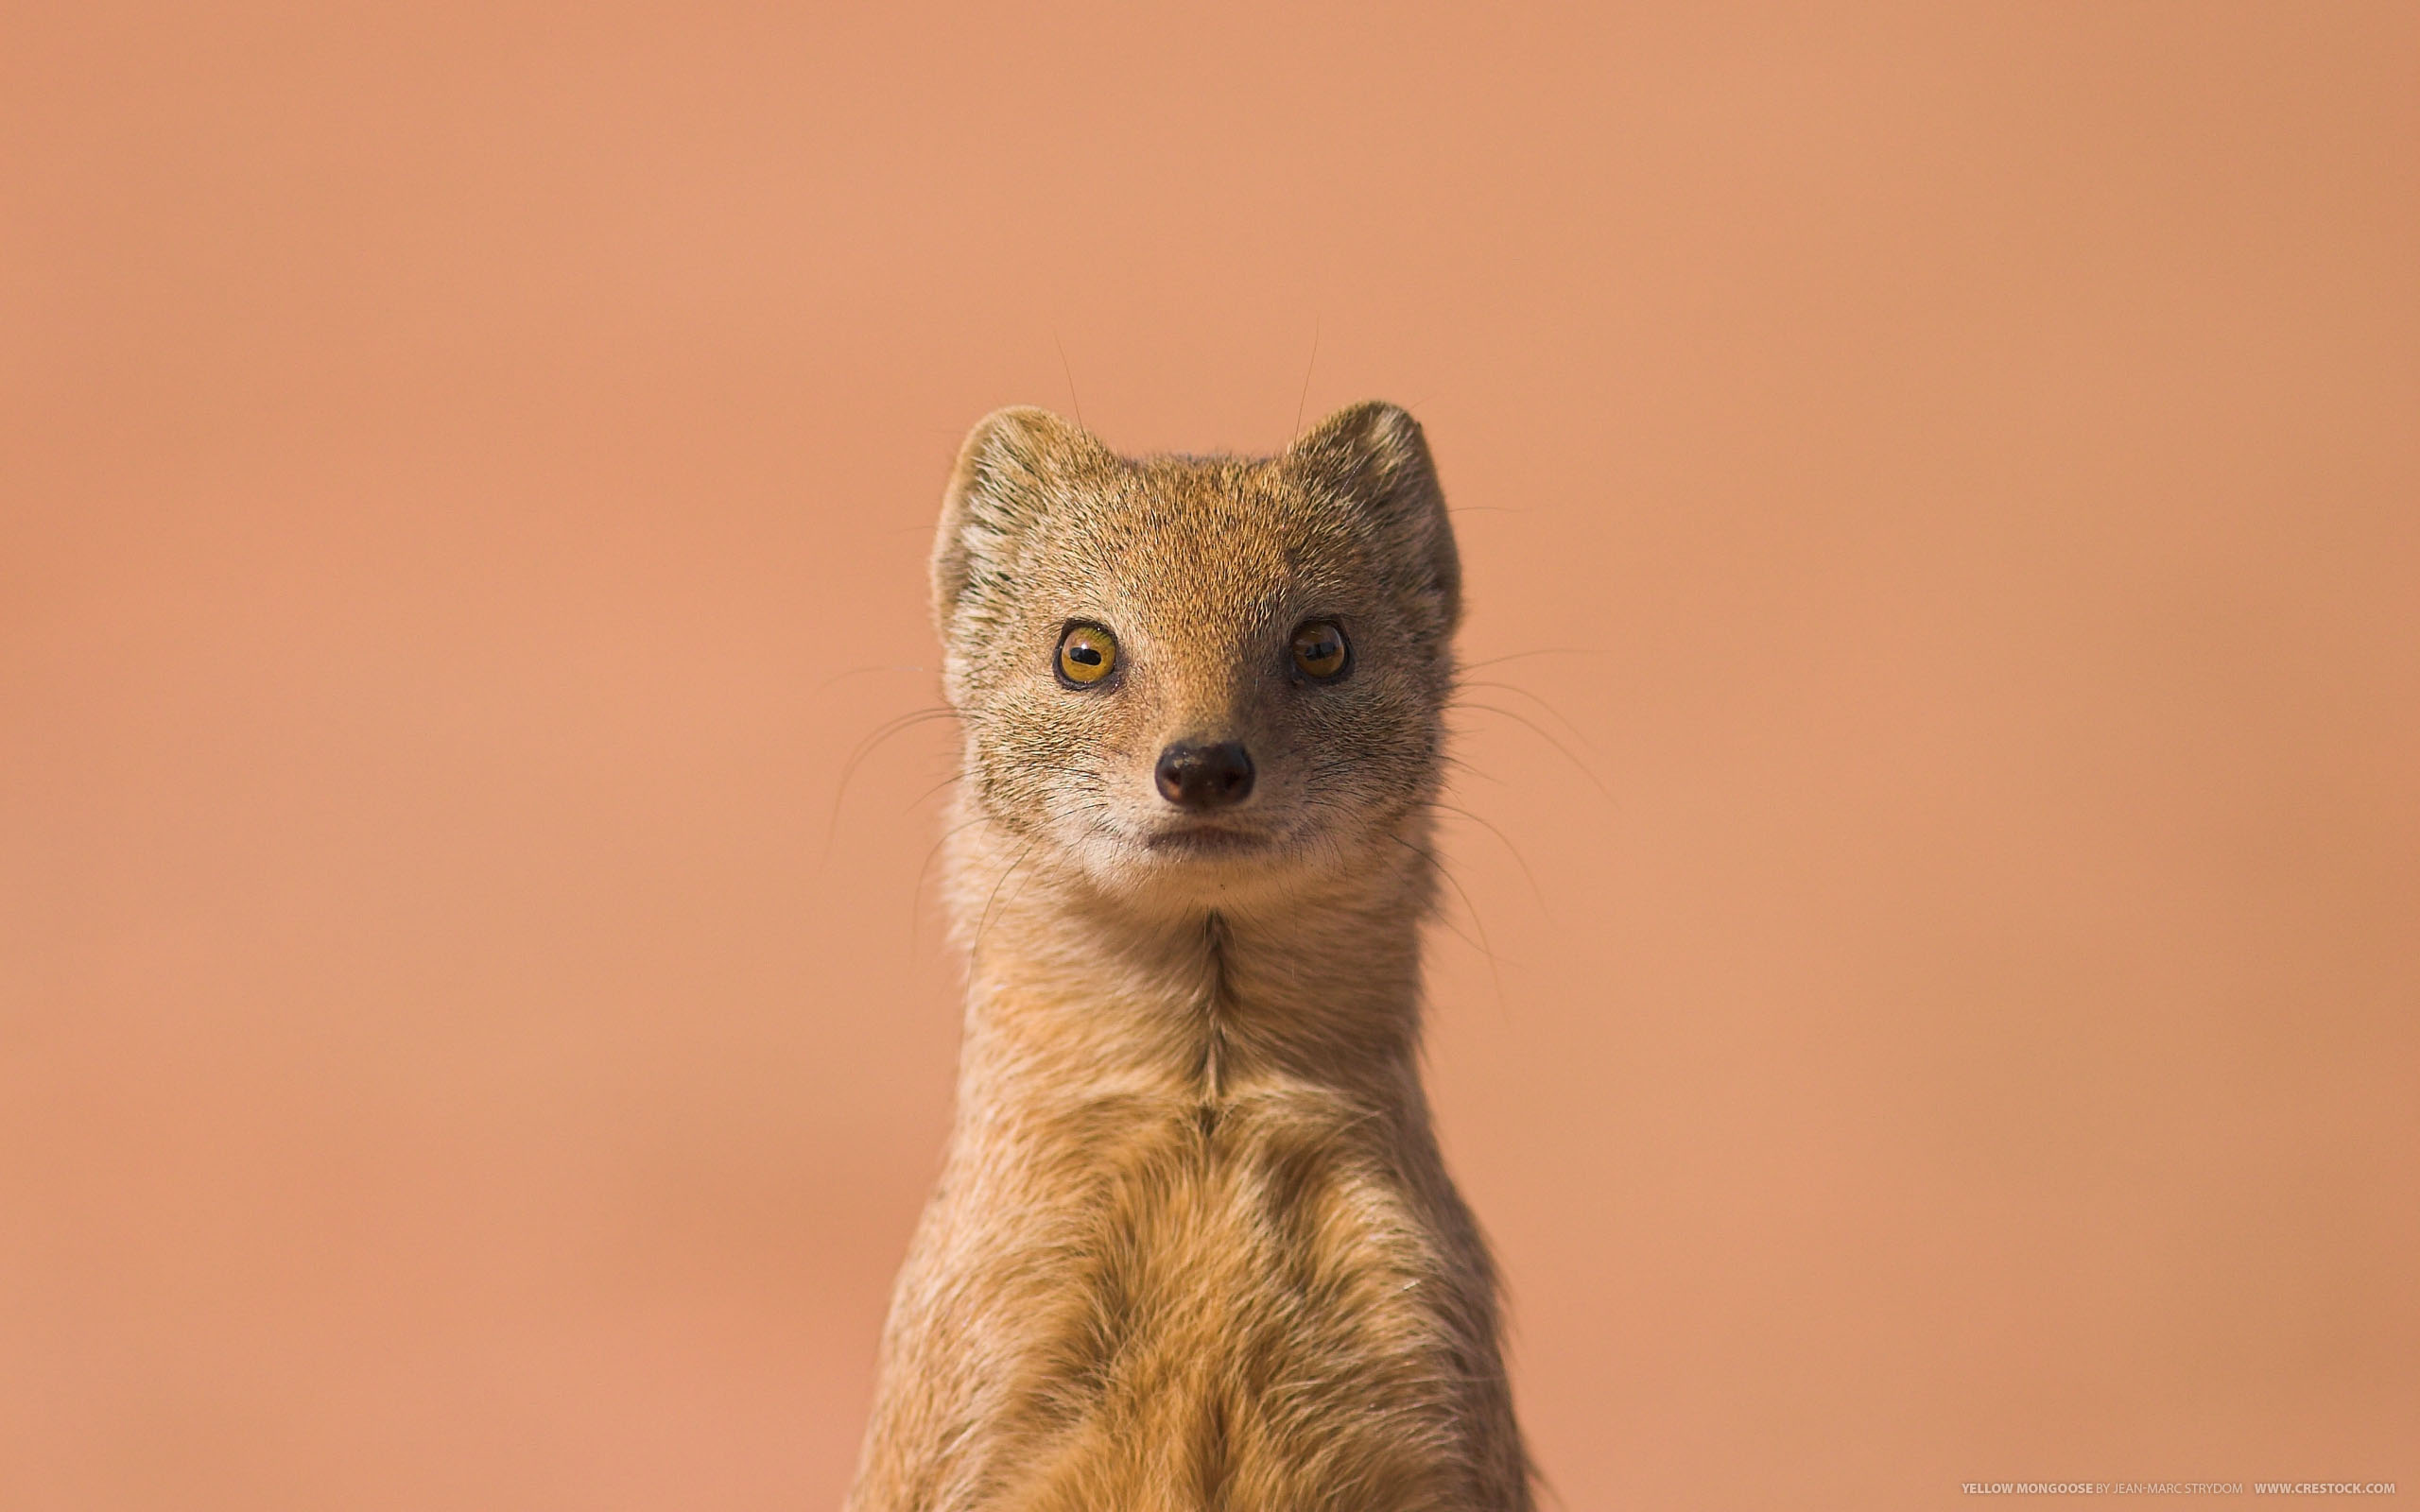 Mongoose, HD wallpaper, Stunning background, Animal photography, 2560x1600 HD Desktop